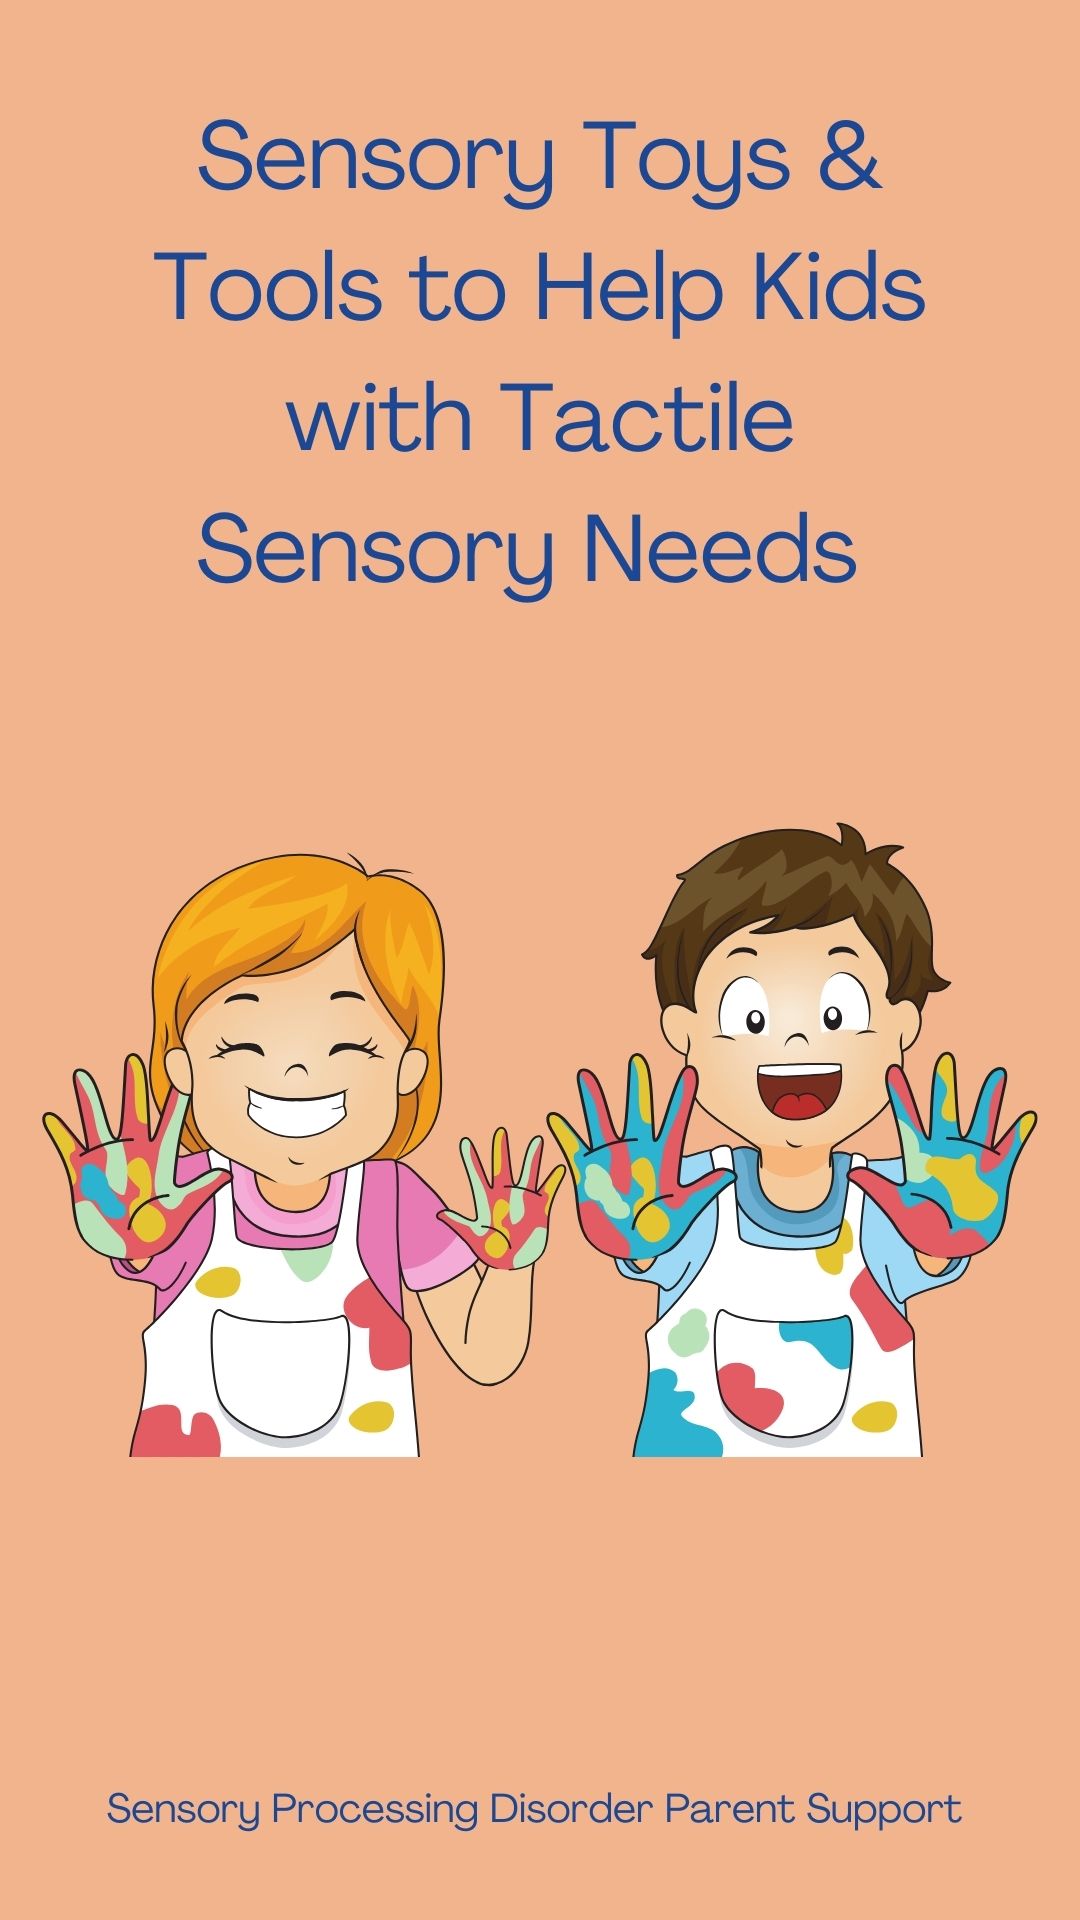 Sensory Toys & Tools to Help Kids with Tactile Sensory Needs